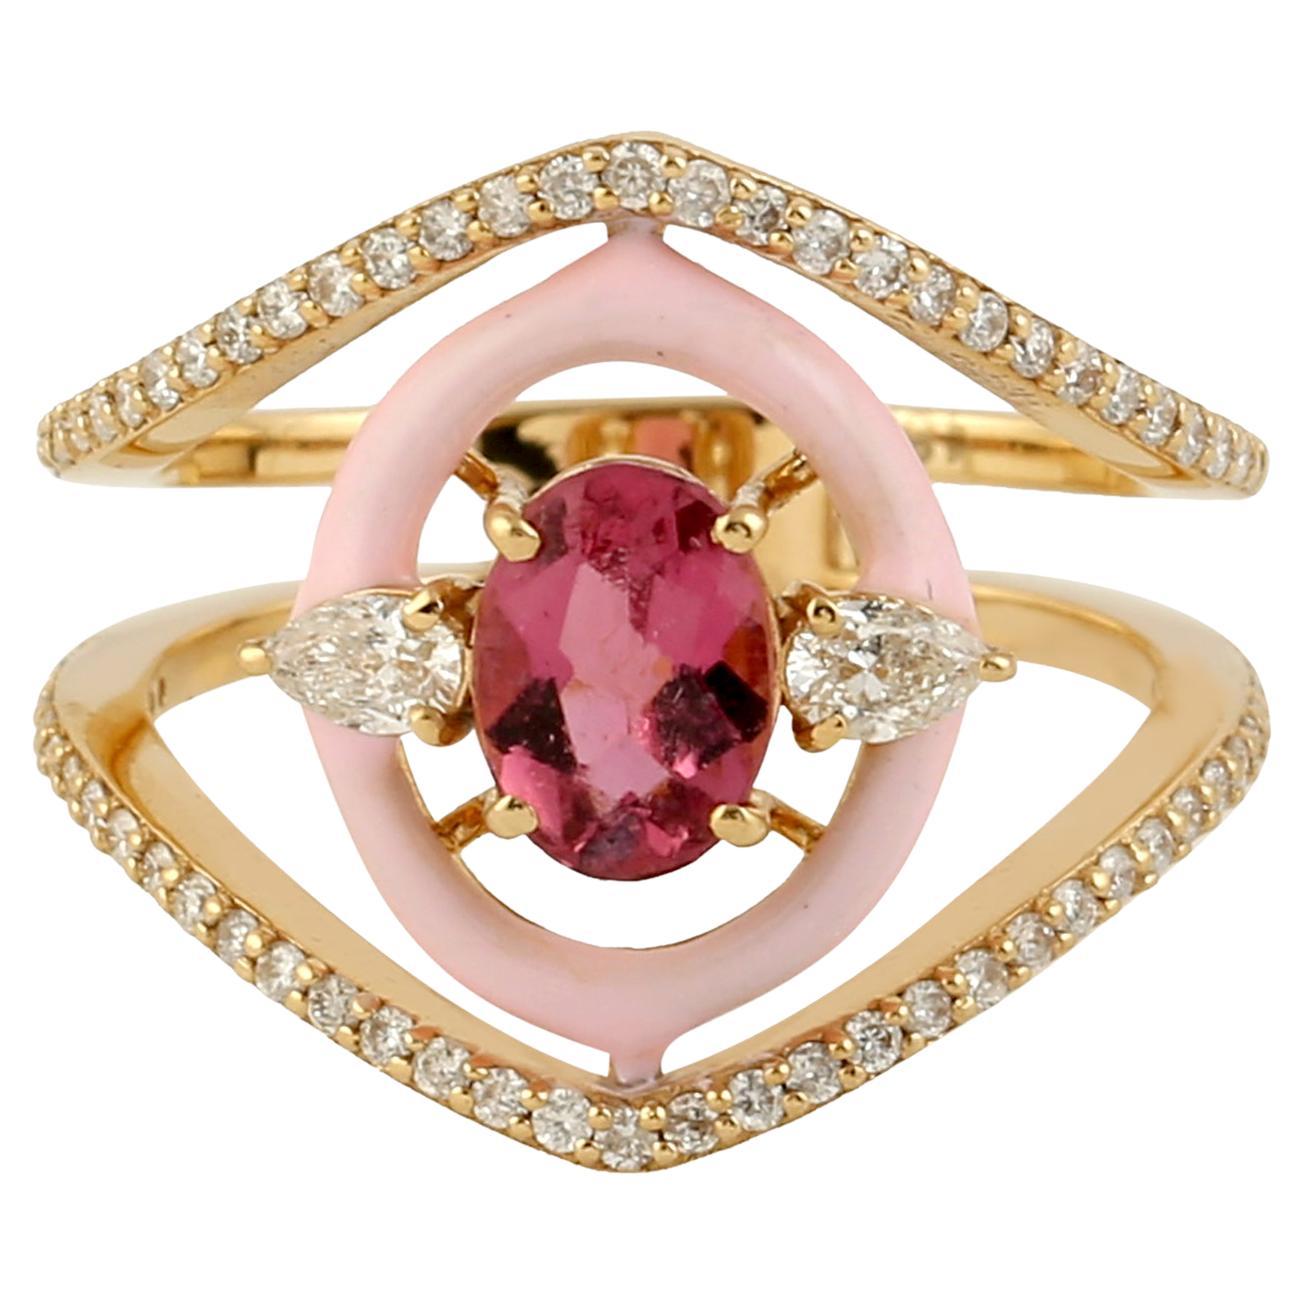 Rose Cut Pink Tourmaline Ring w/ Pink Enamel & Diamonds Made In 18k Yellow Gold For Sale